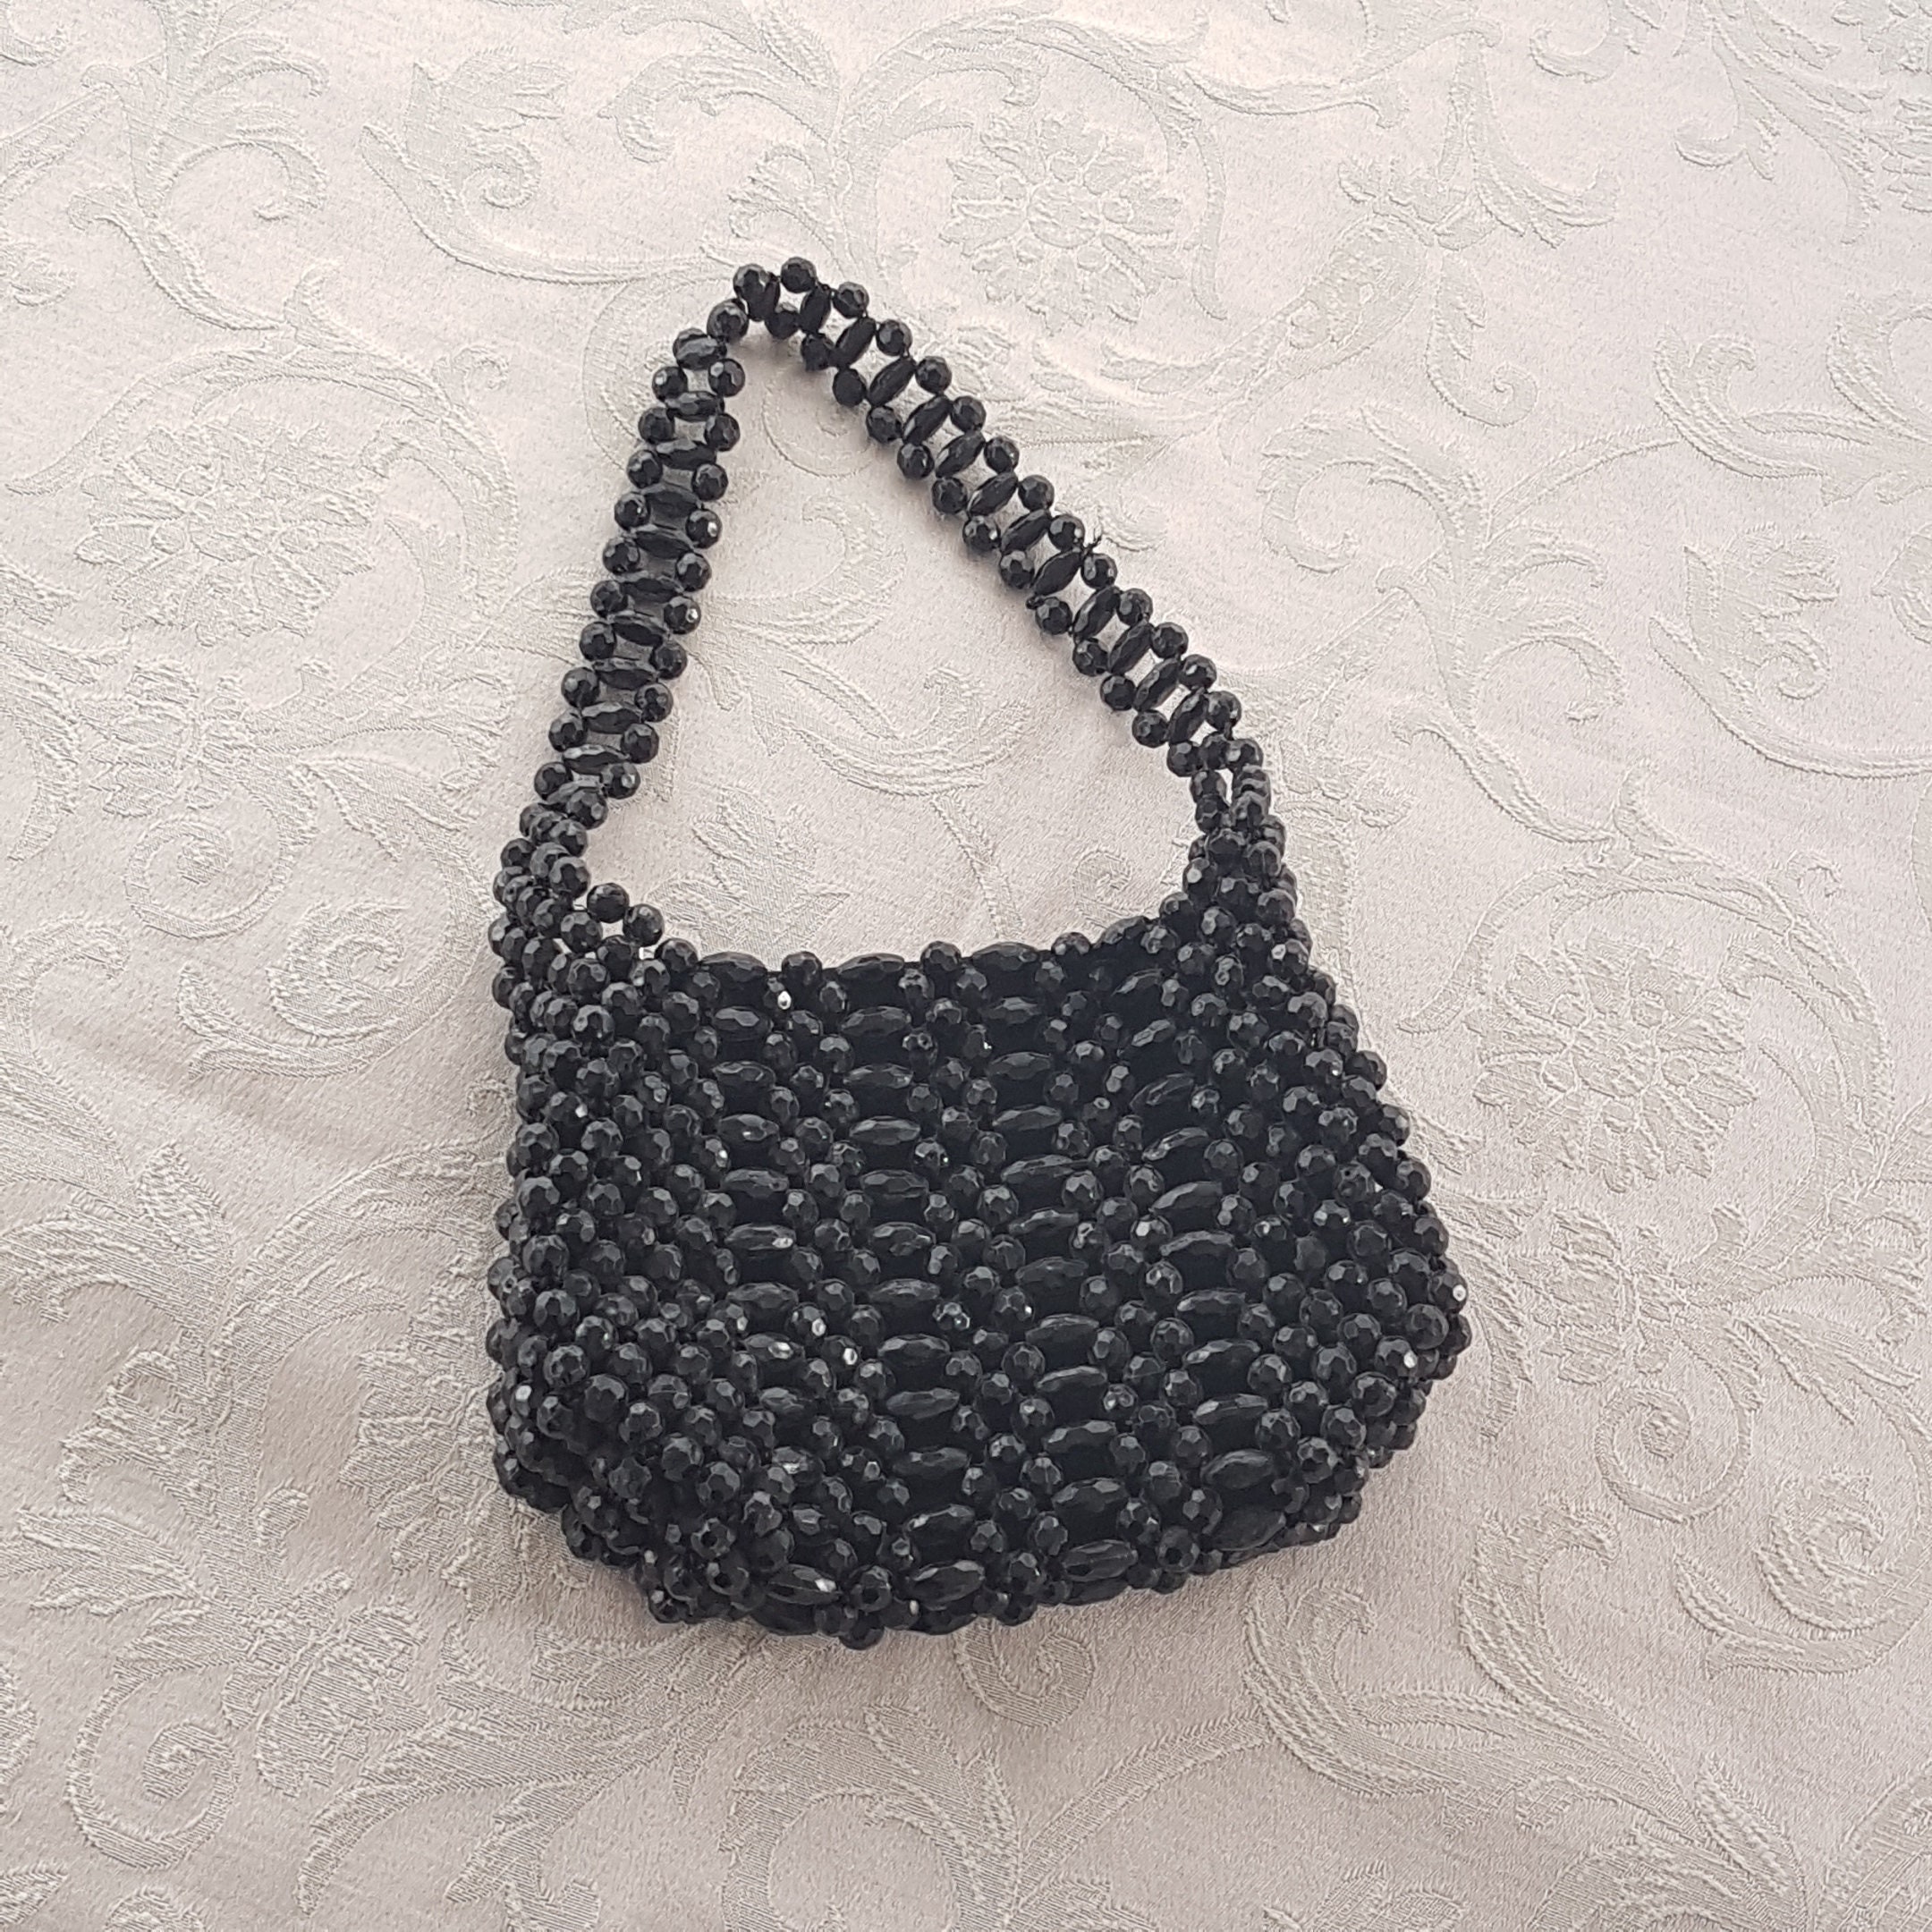 Black Beaded Bag, Vintage Beaded Purse, Zippered, Hand Made in Hong Kong